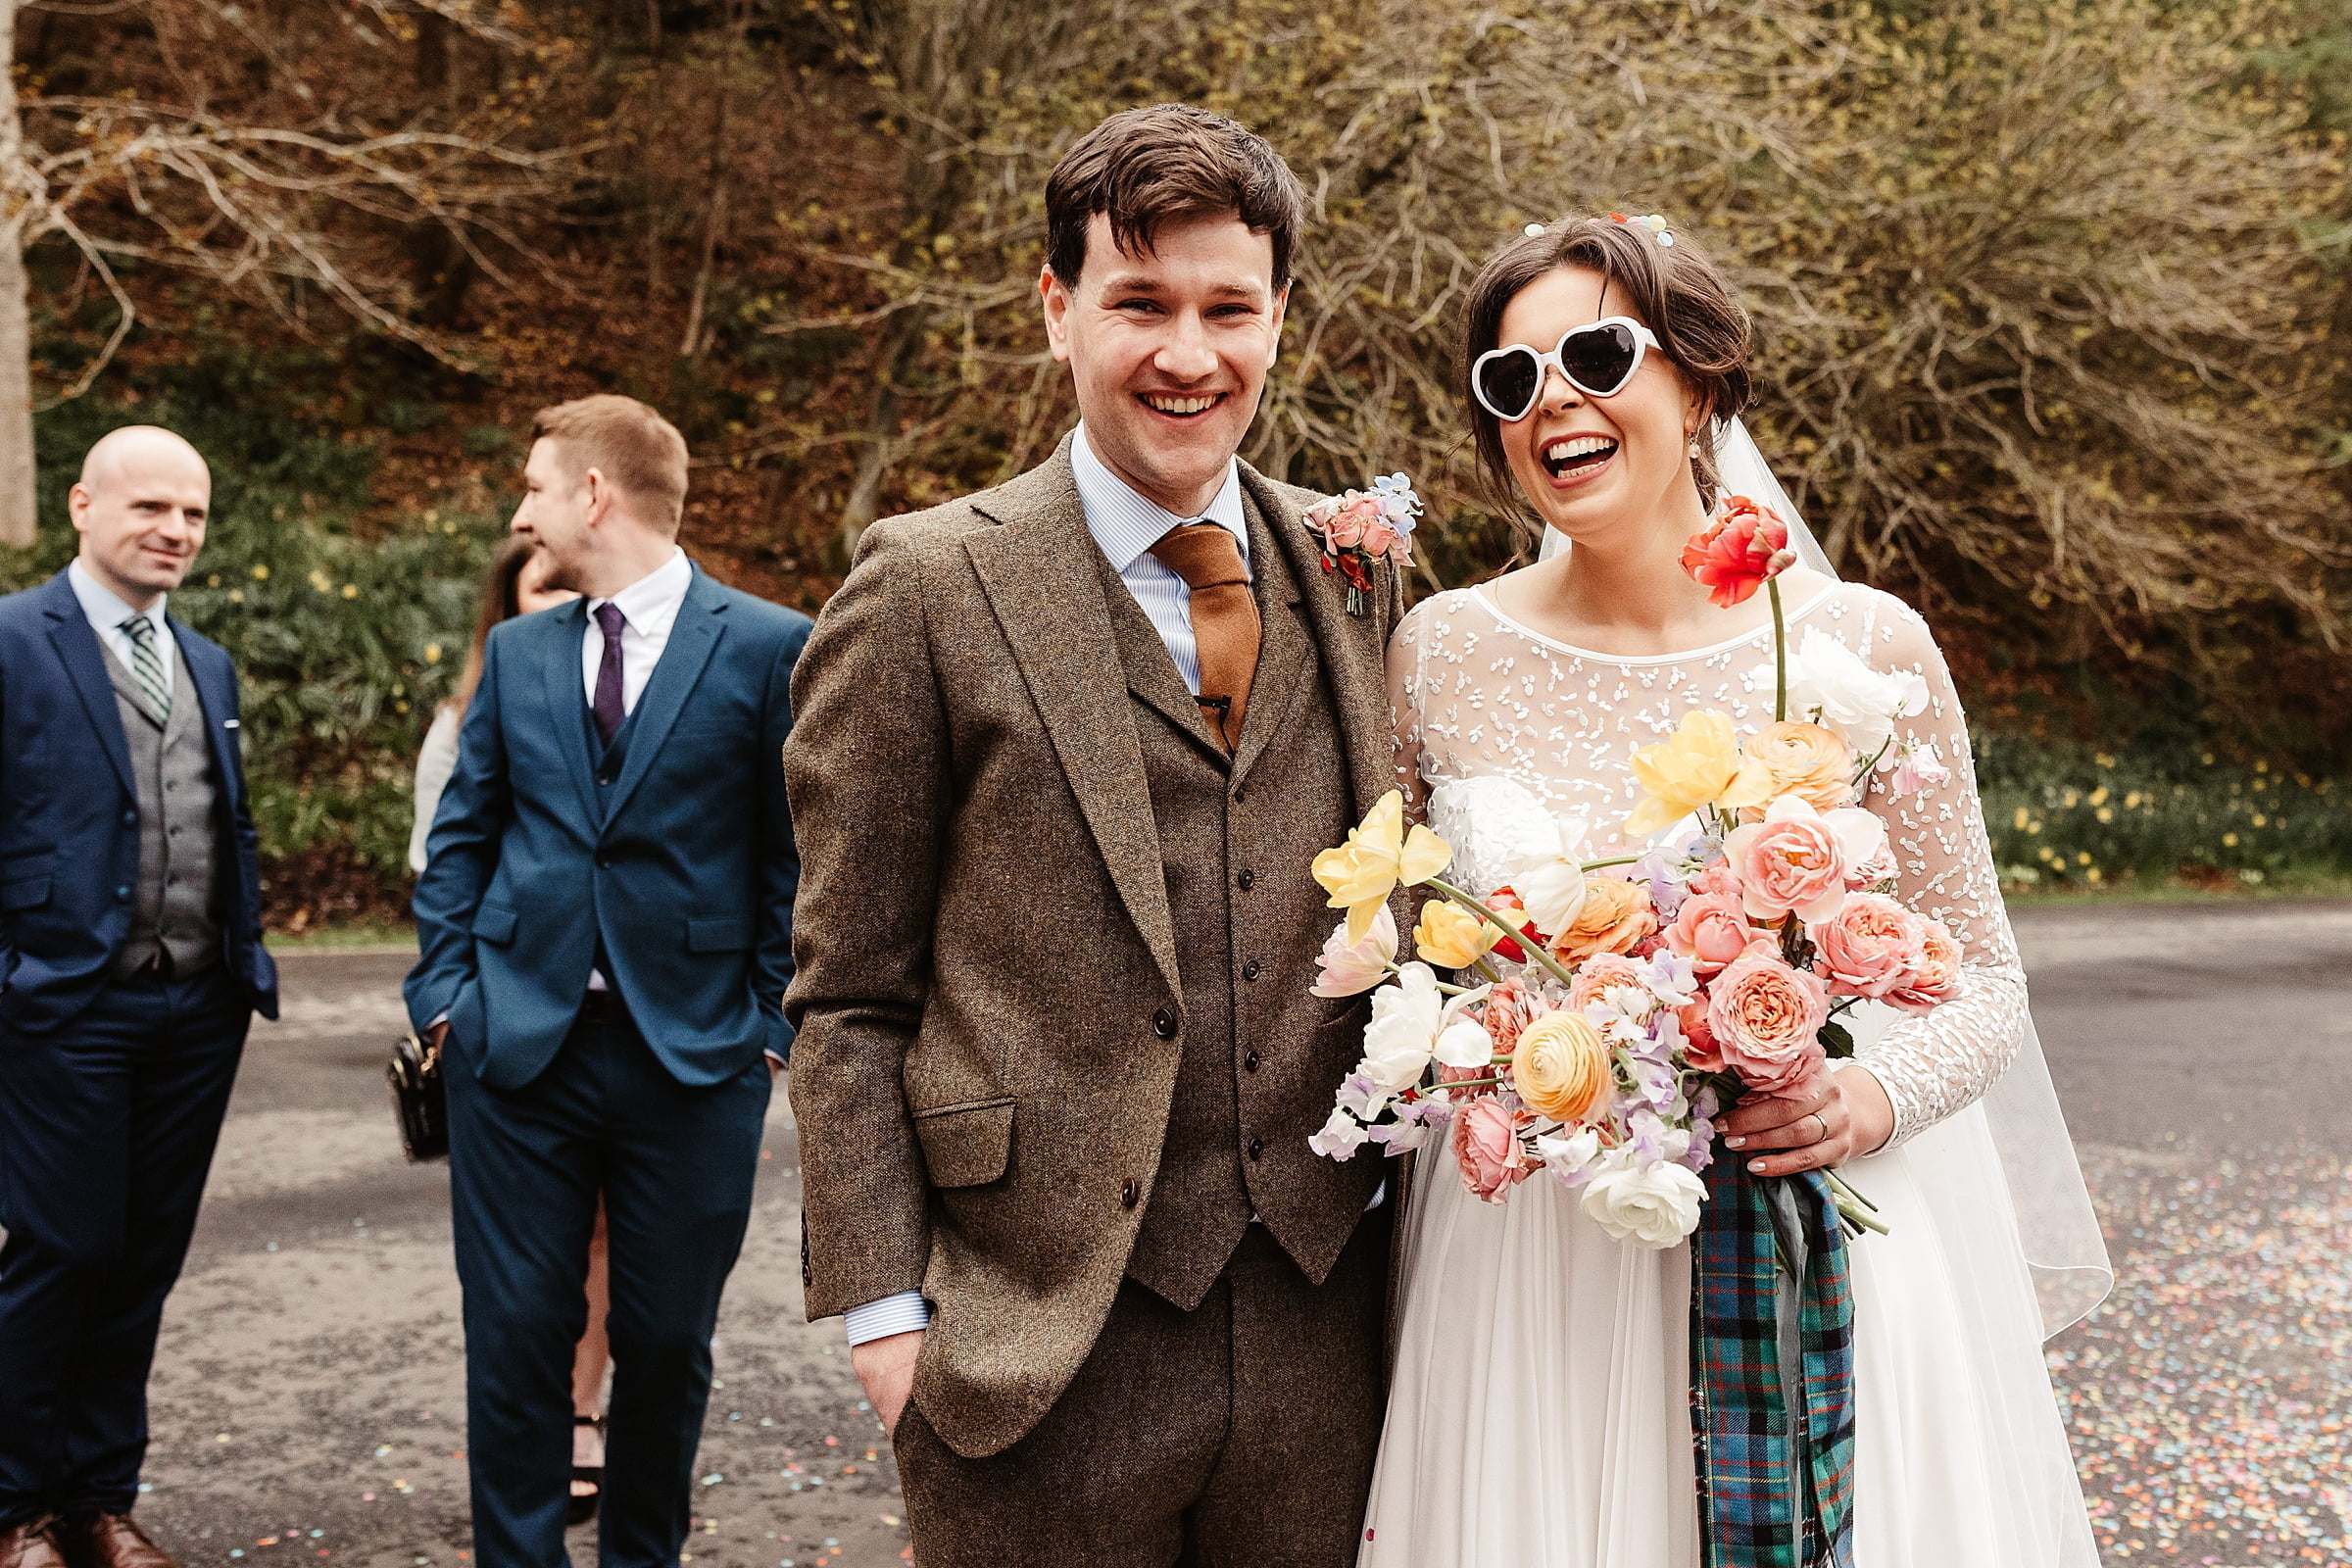 drumtochty castle drinks reception outdoors bride and groom walker slater suit